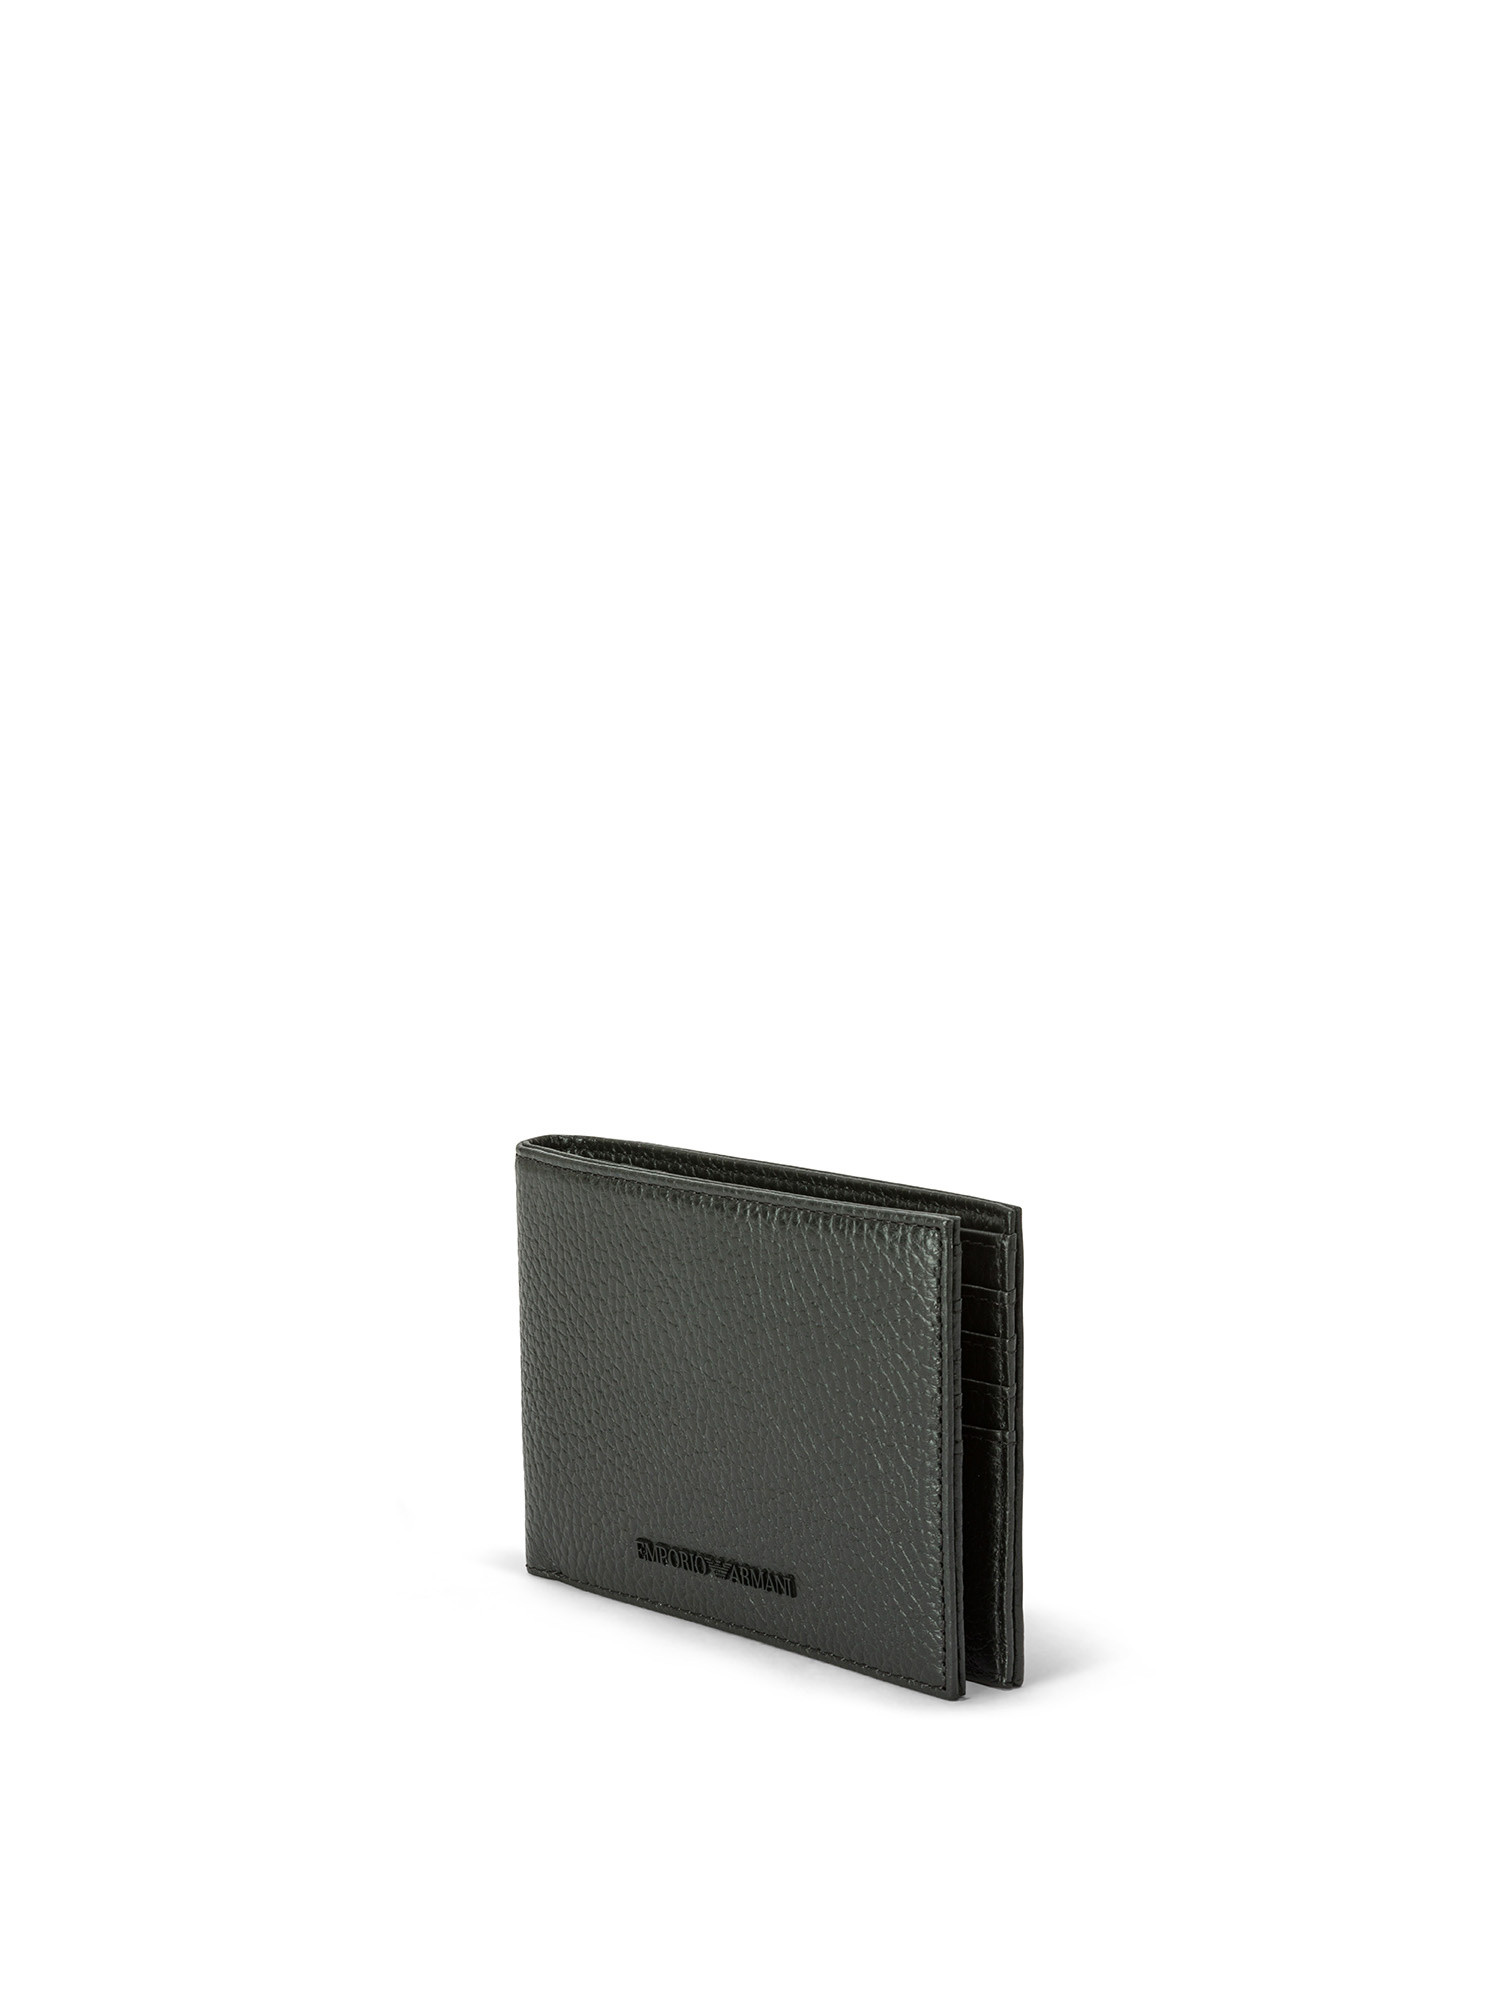 Emporio Armani - Tumbled leather wallet, Black, large image number 1